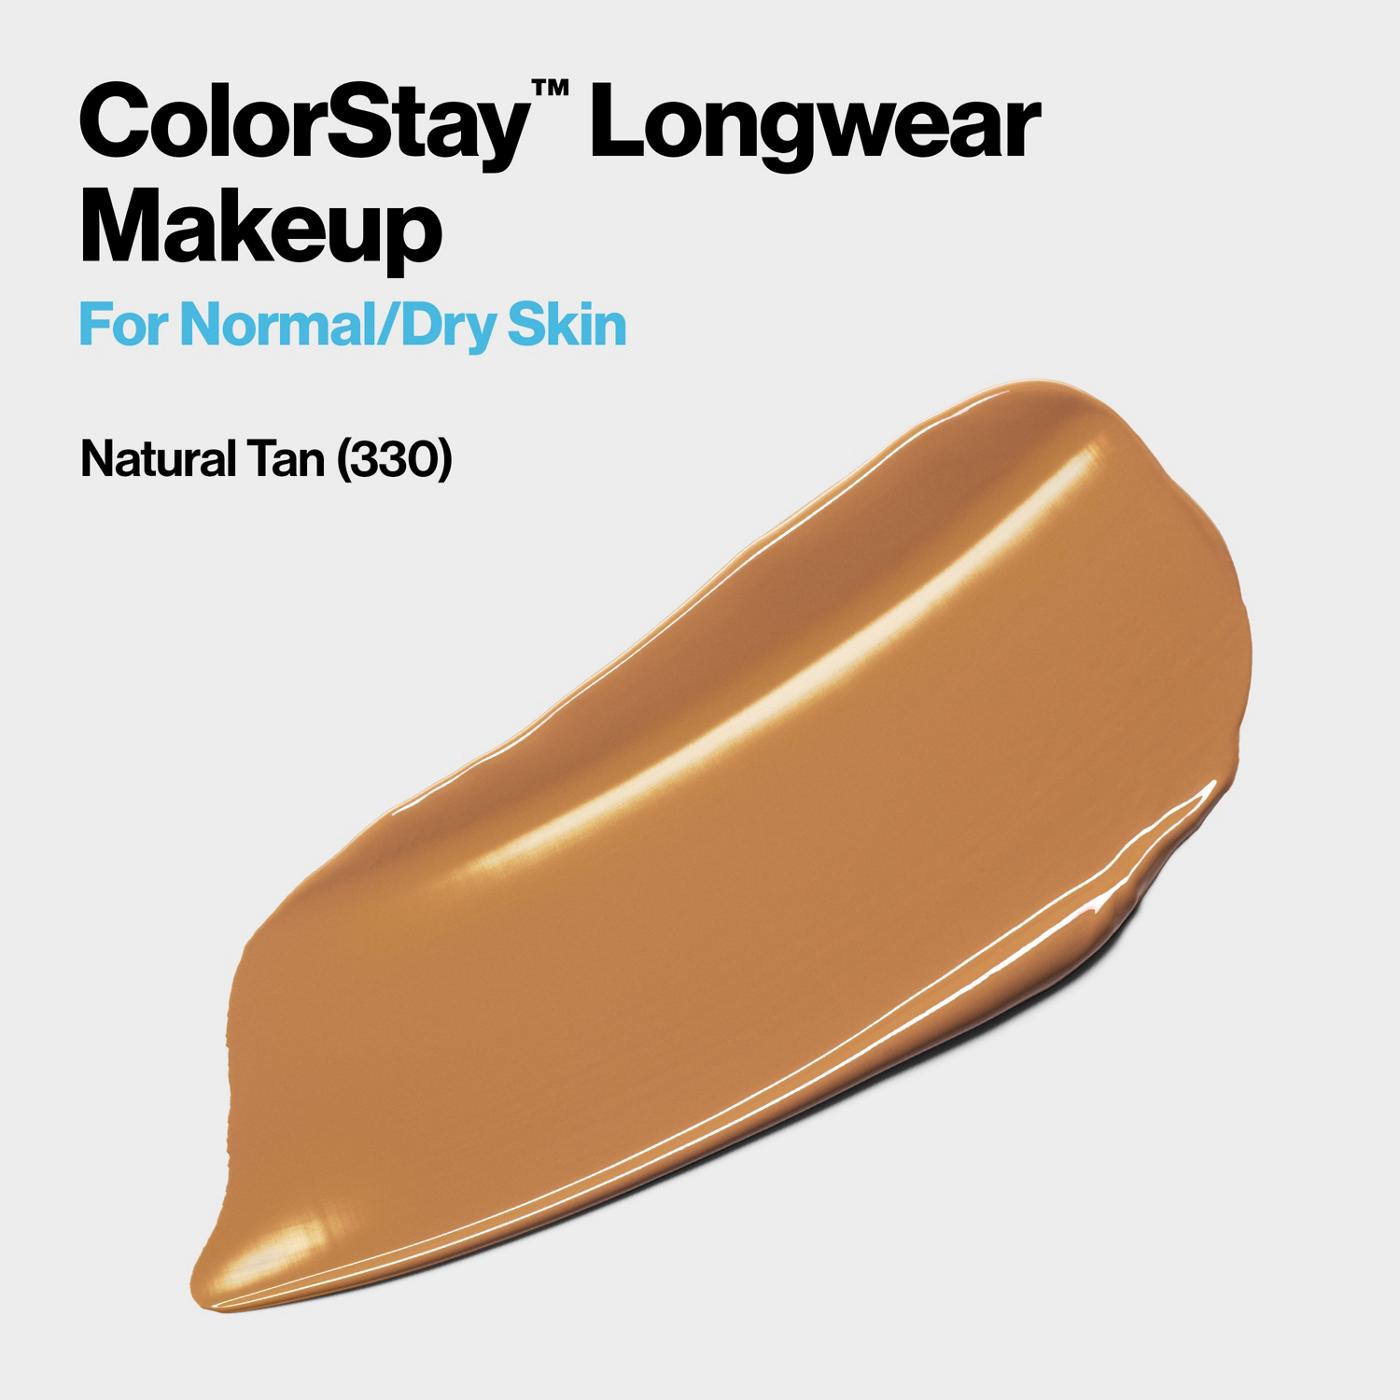 Revlon ColorStay Makeup for Normal/Dry Skin, 330 Natural Tan; image 5 of 6